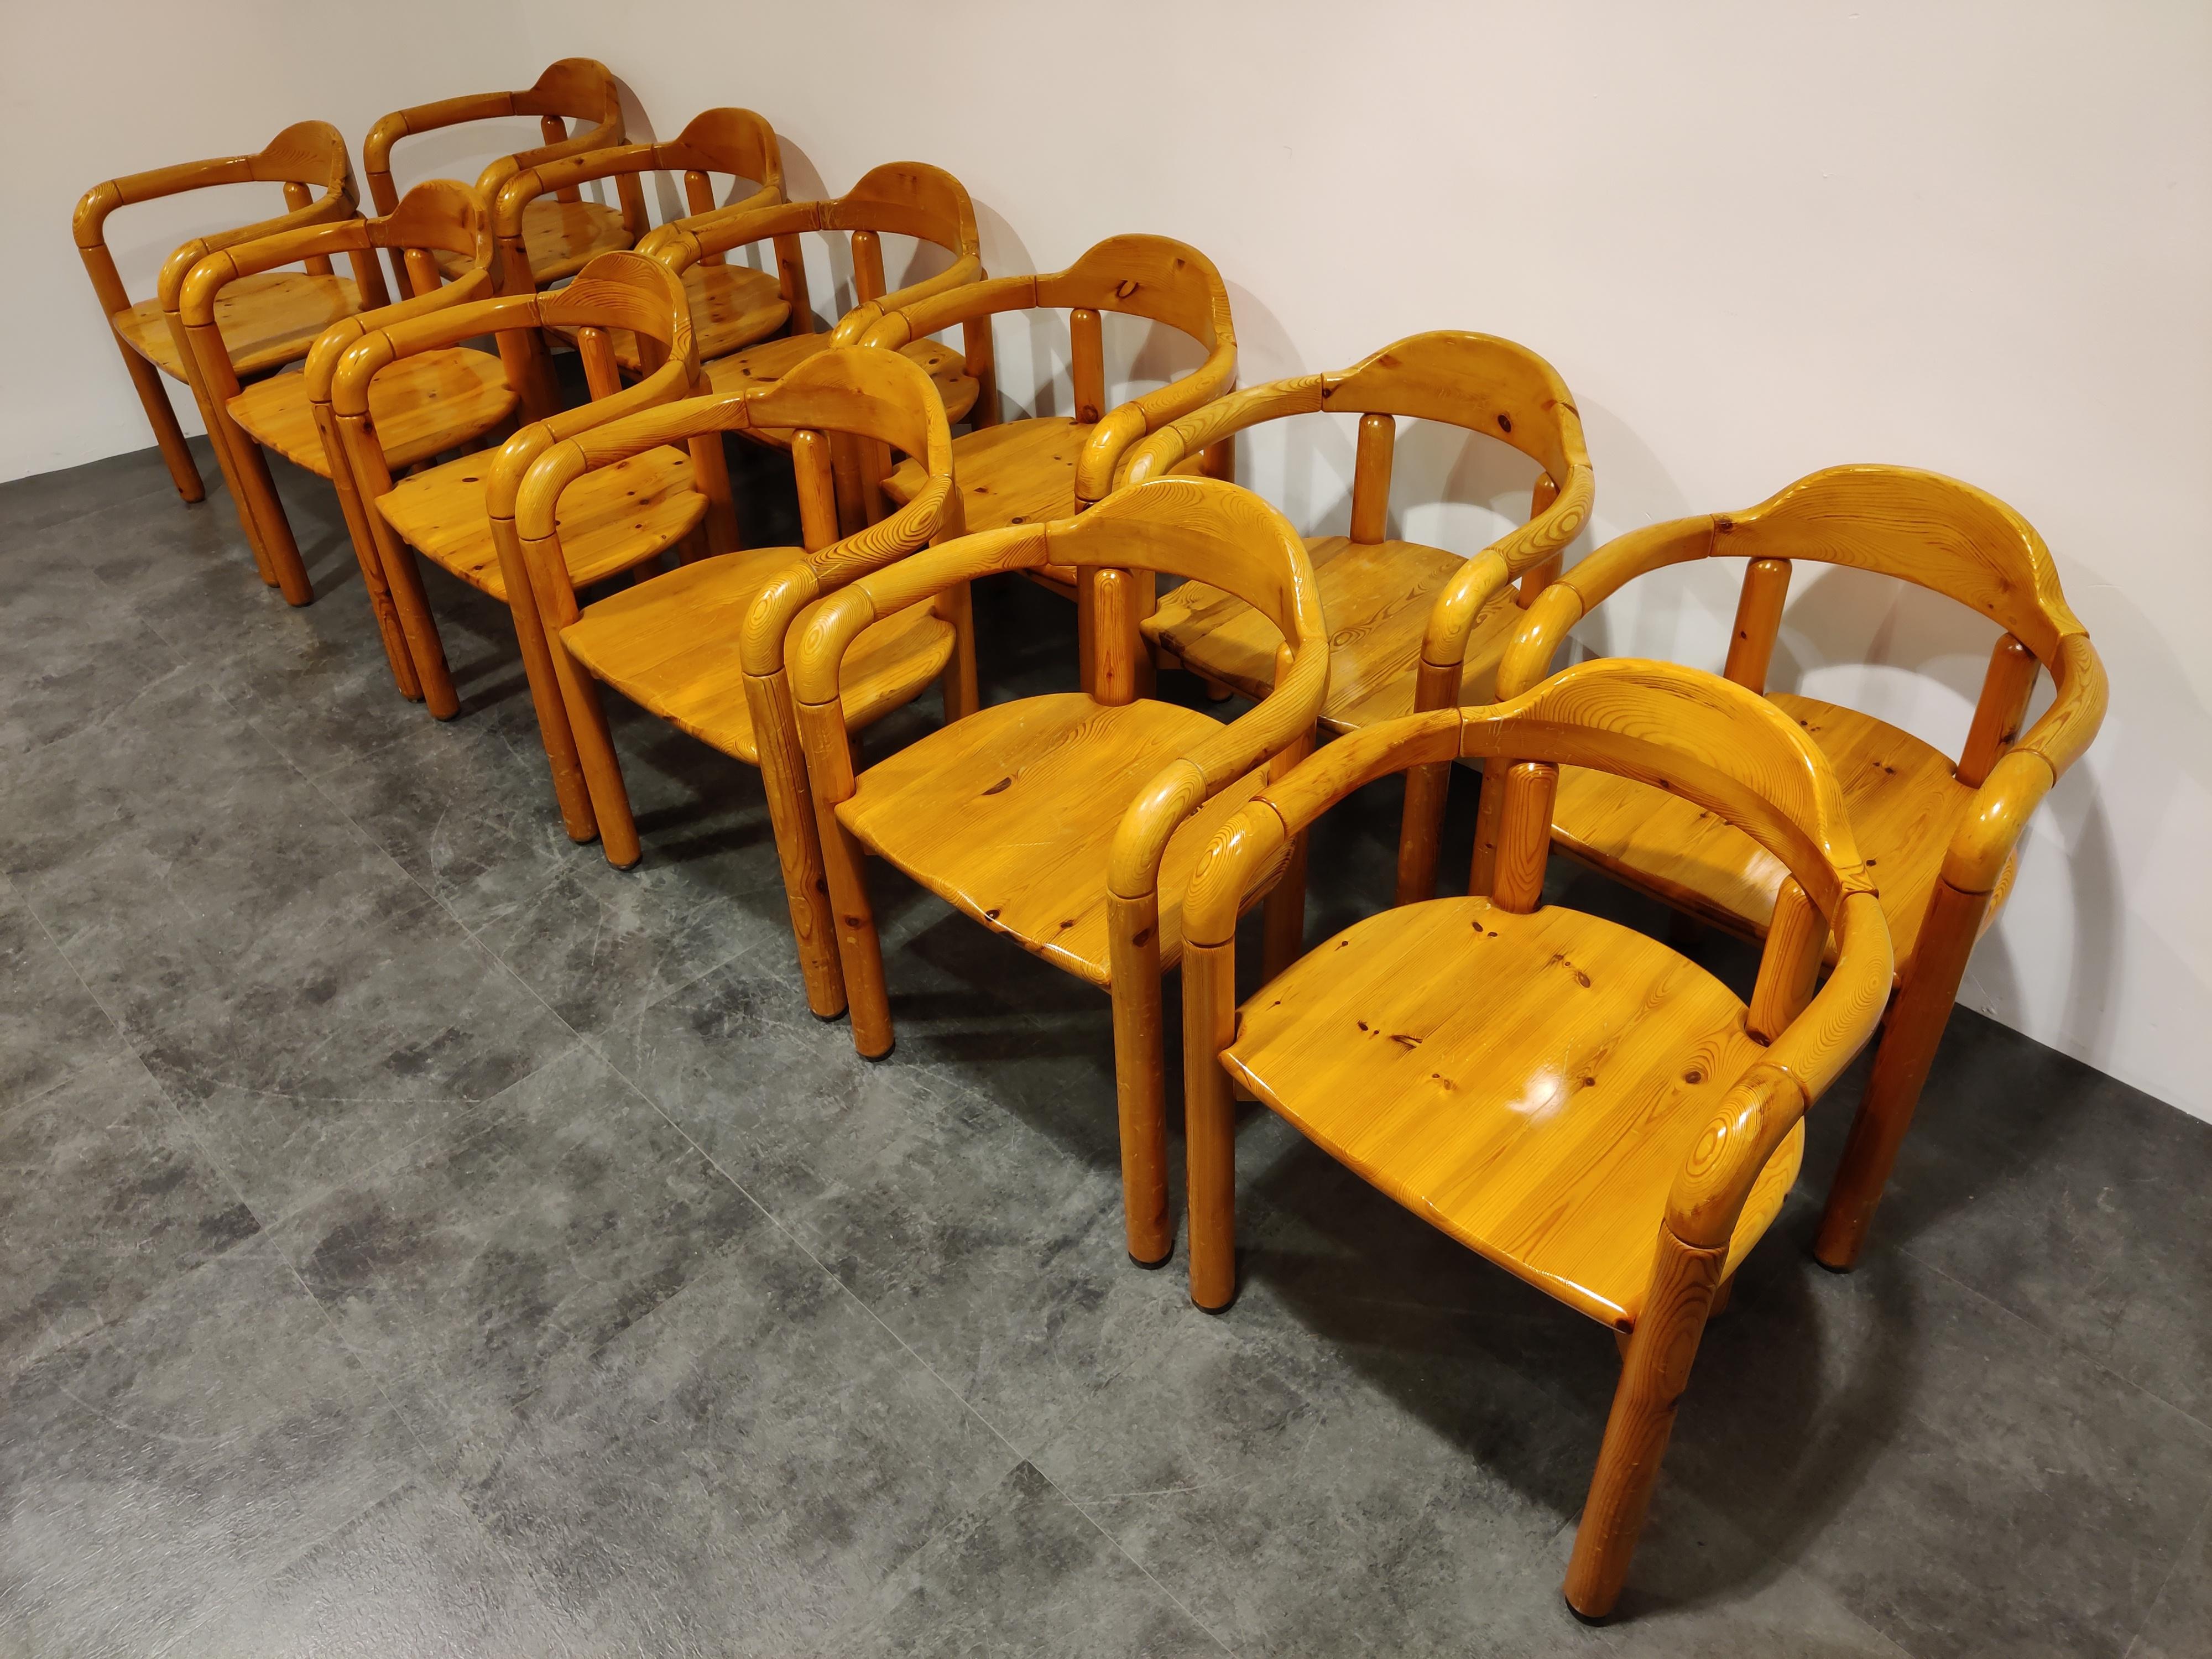 Scandinavian Modern Rainer Daumiller Pine Wood Dining Chairs for Hirtshals Savvaerk Set of 6, 1980s